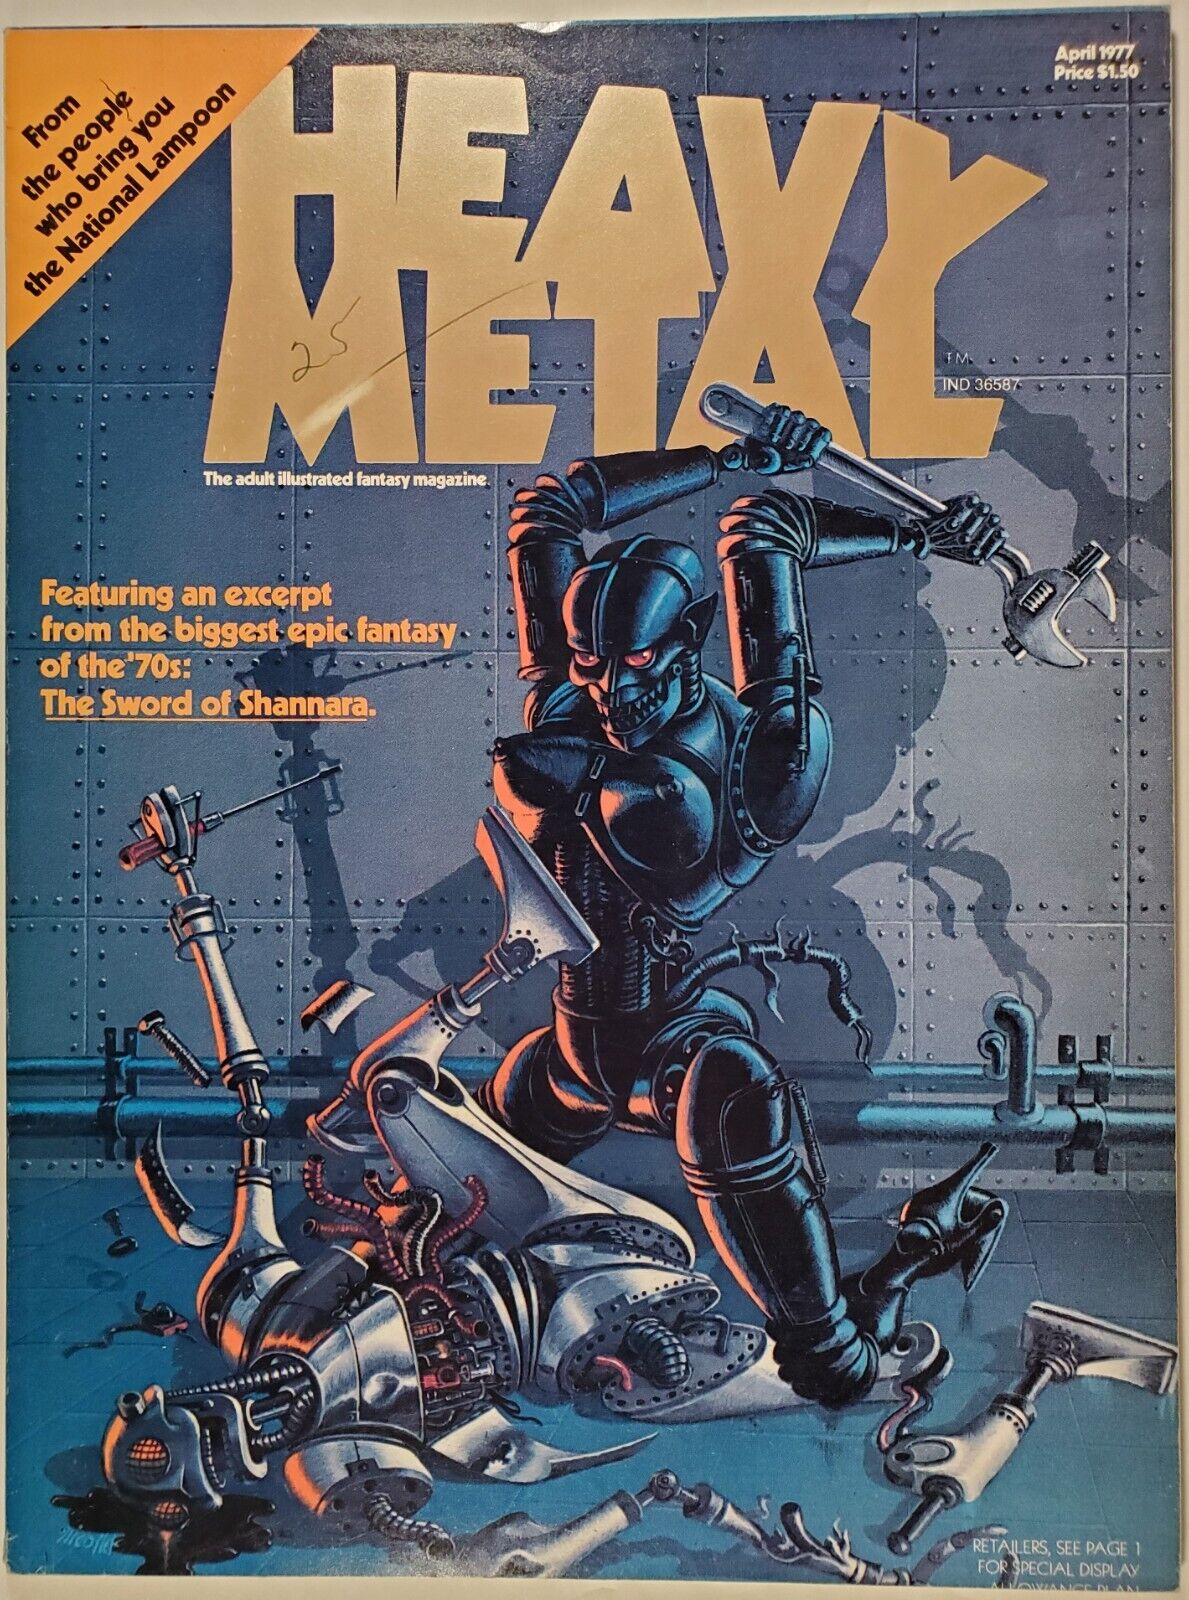 HEAVY METAL magazine 1 [April, 1977]